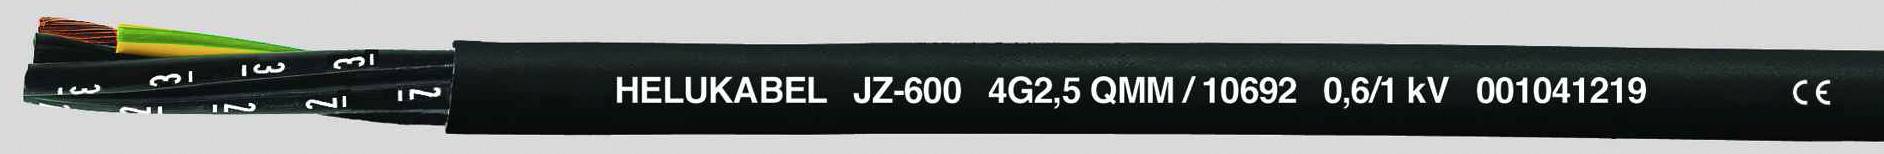 HELUKABEL JZ-600 Steuerleitung 14 G 0.75 mm² Schwarz 10599-1000 1000 m